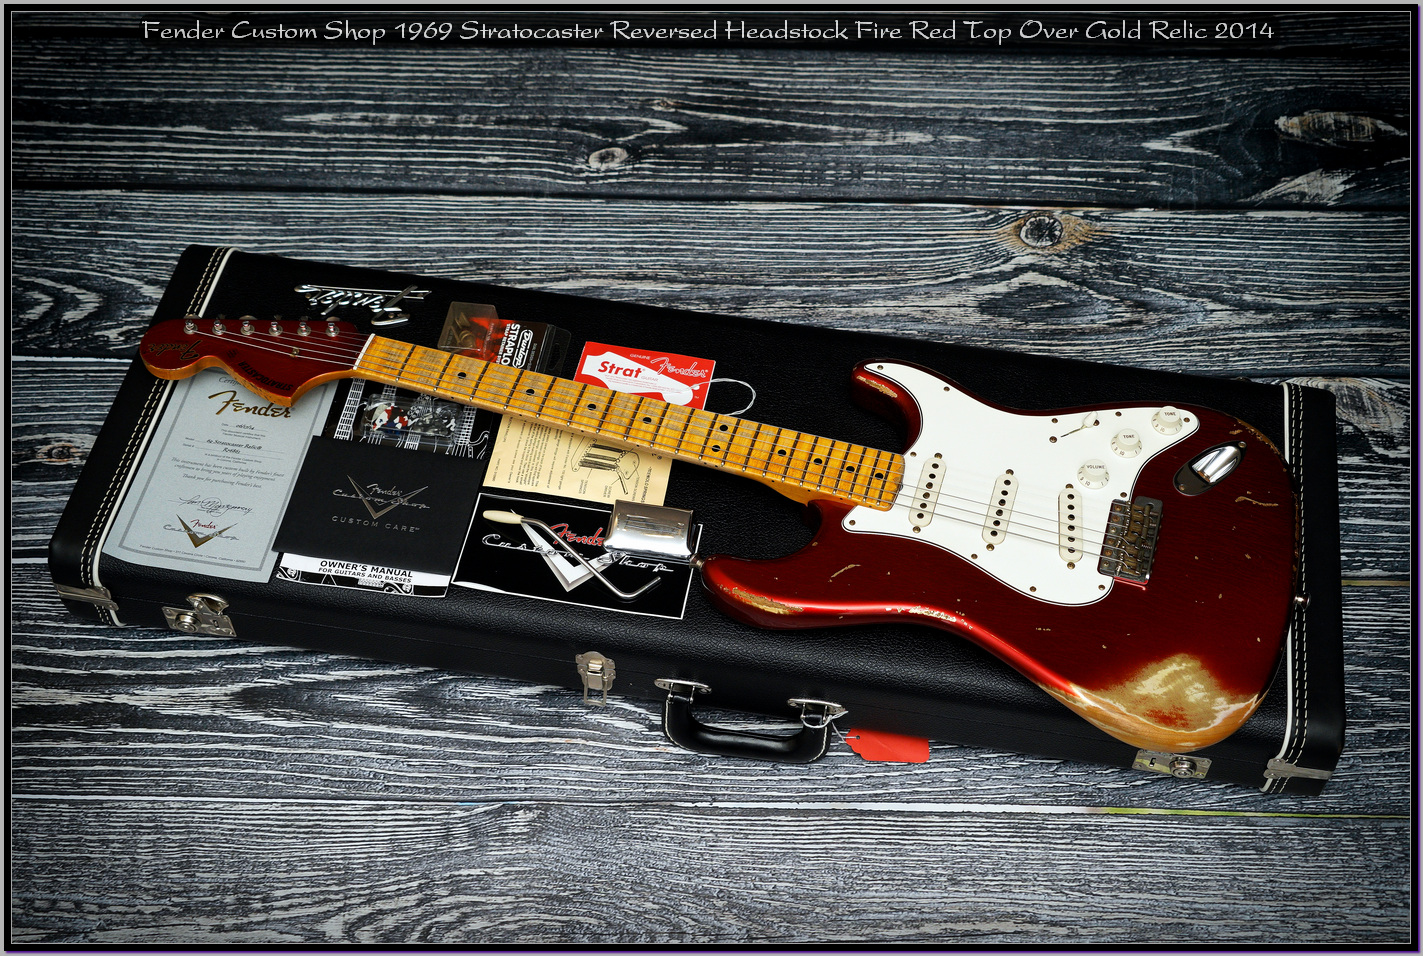 Fender Custom Shop 1969 Stratocaster Reversed Headstock Fire Red Top Over Gold Relic 2014 02_x1440.jpg